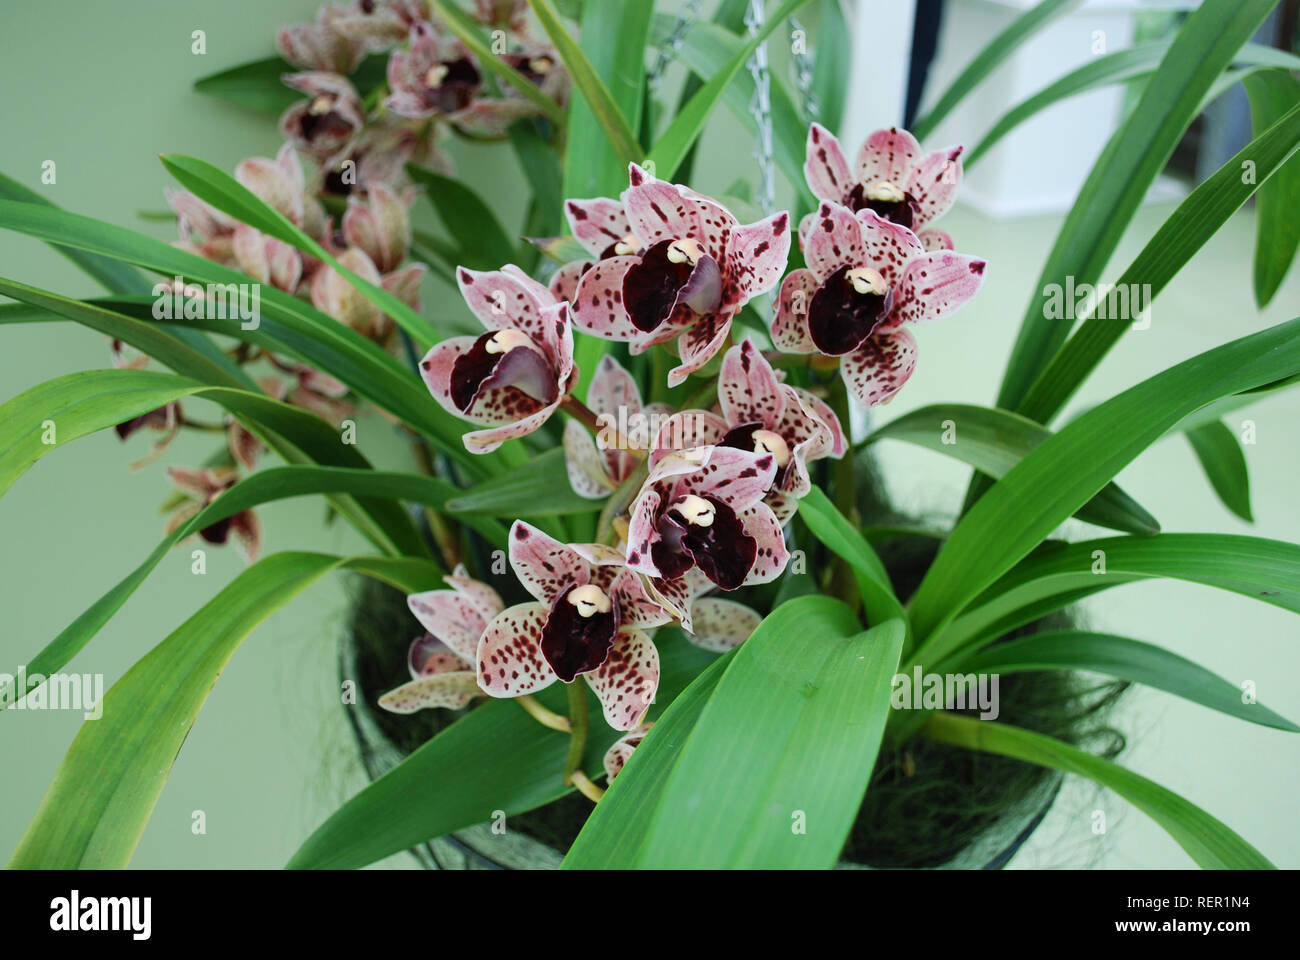 Cymbidium orchid purple flowers. Decorative plants for gardening and greenhouse. Stock Photo